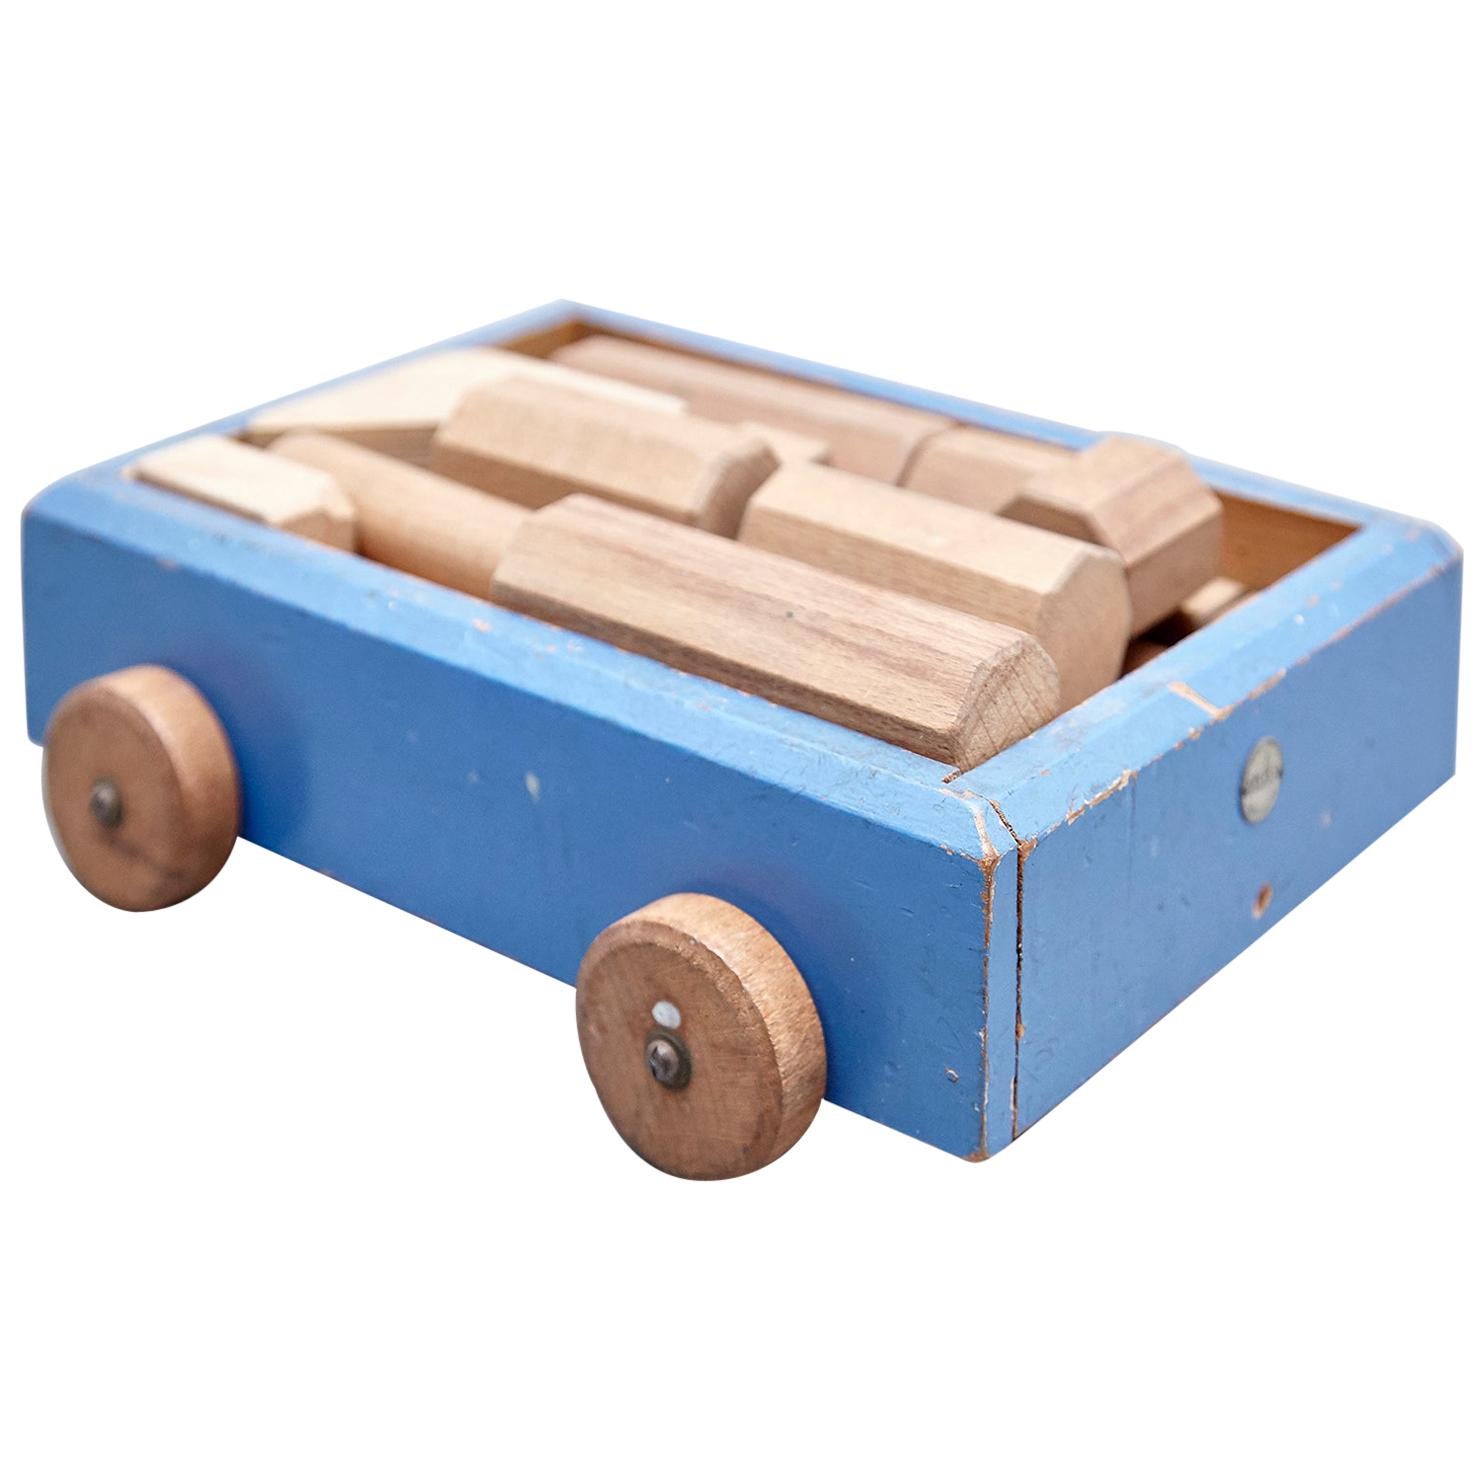 Ko Verzuu for Ado, Mid-Century Modern, Wood Car Construction Netherlands Toy